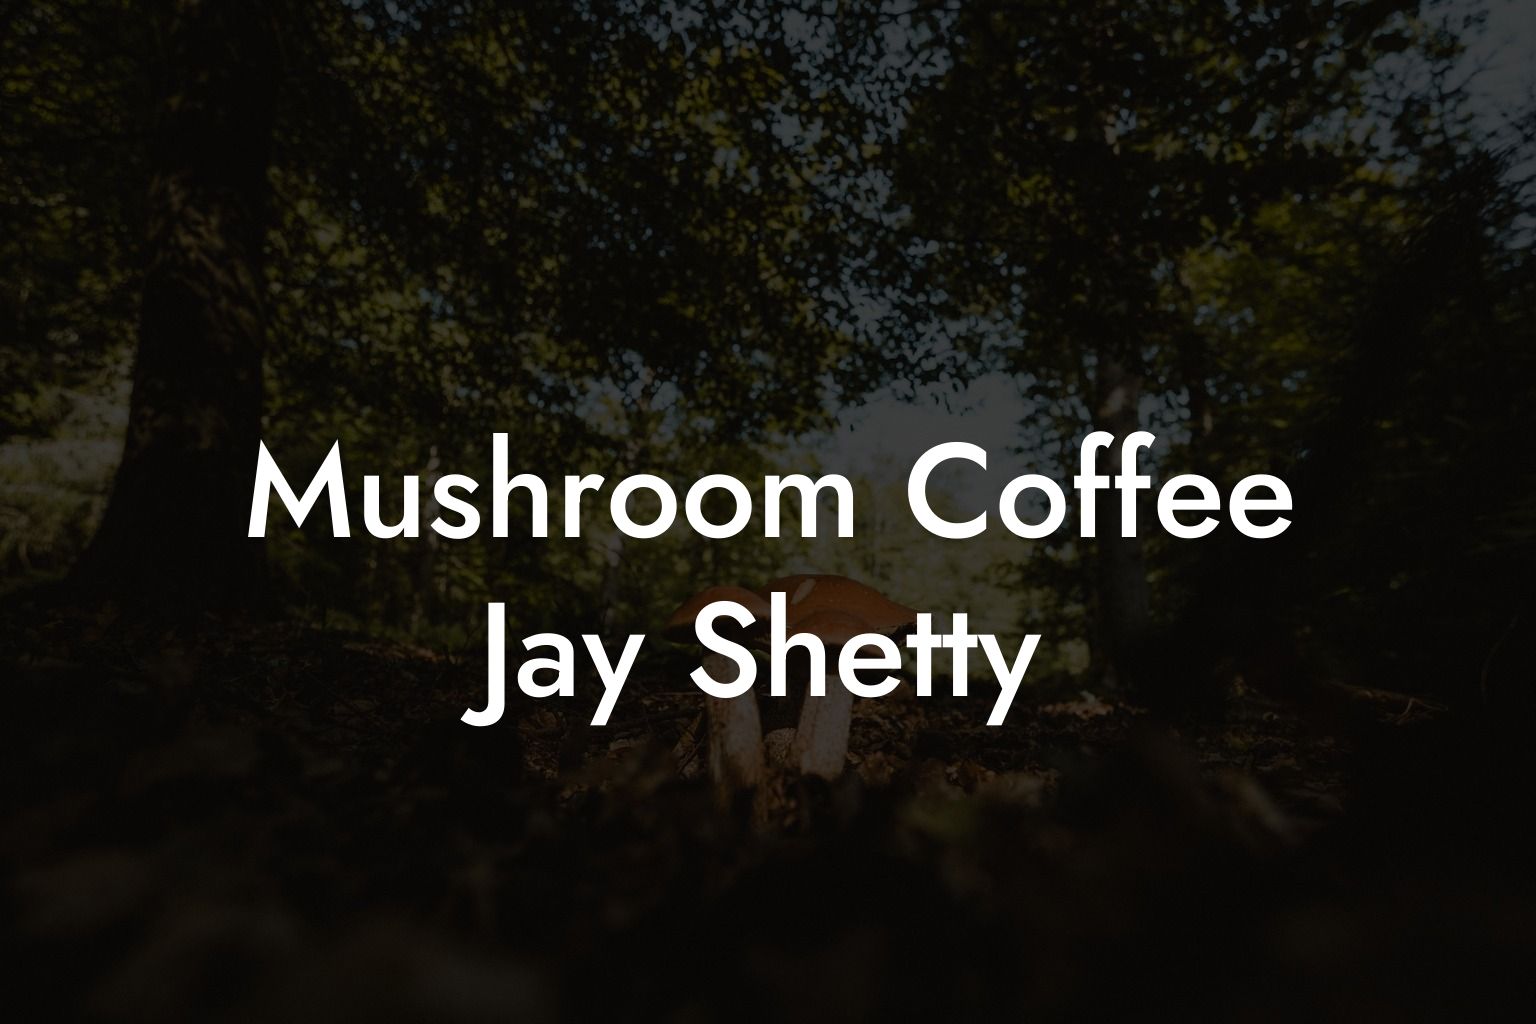 Mushroom Coffee Jay Shetty